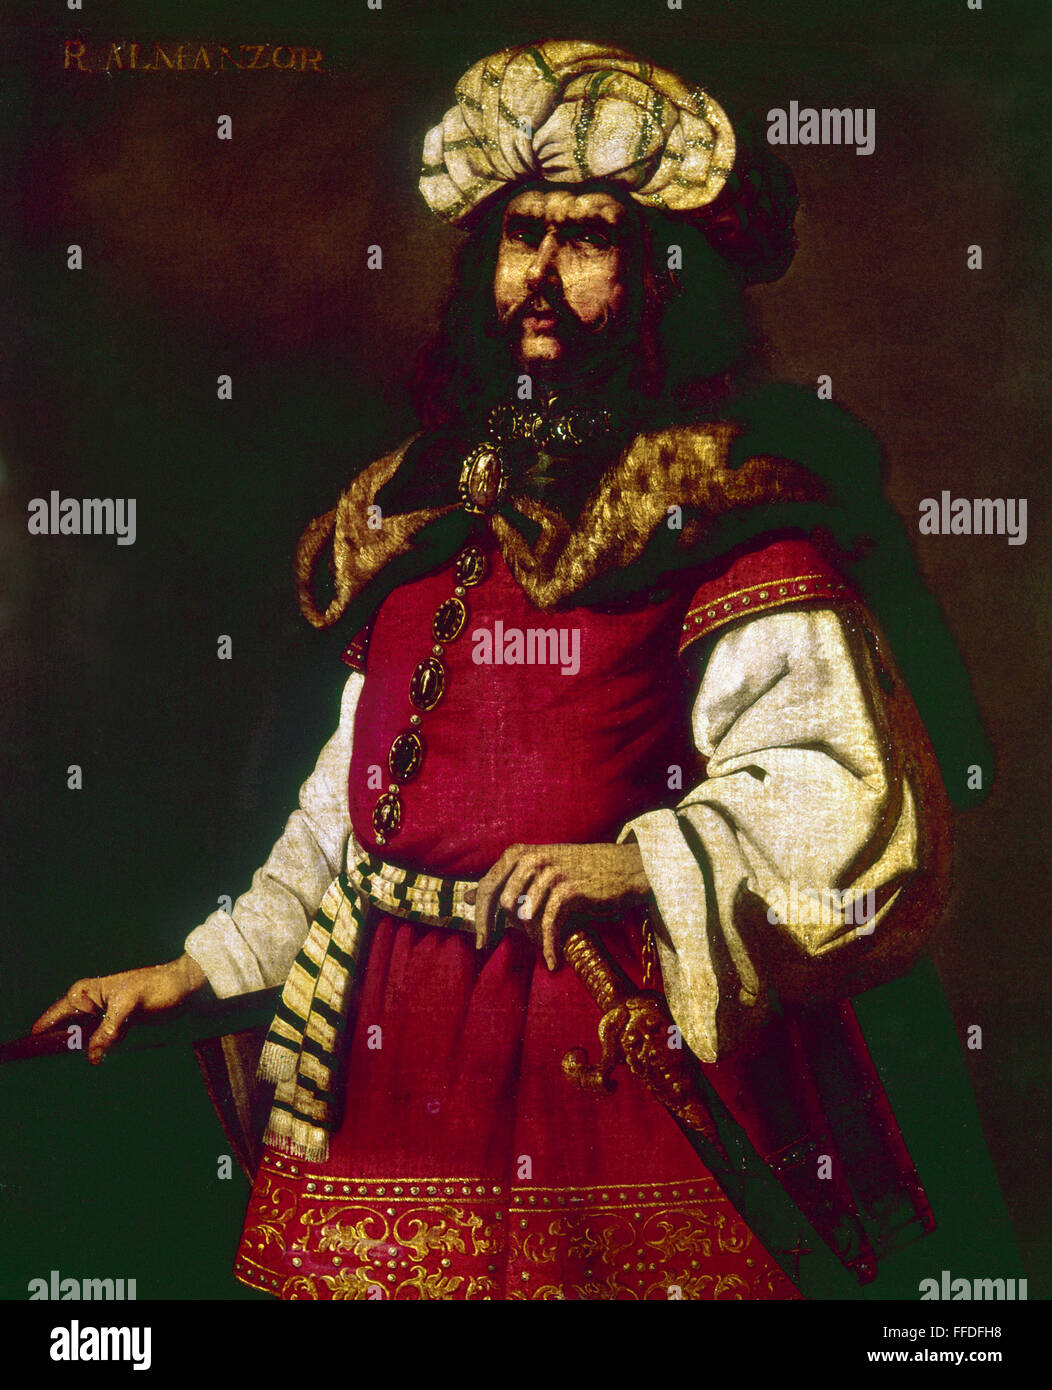 AL-MANSUR IBN ABI AAMIR (938-1002). Muslim ruler of Spain. Oil on canvas, 17th century, by Francisco de Zurbarßn. Stock Photo